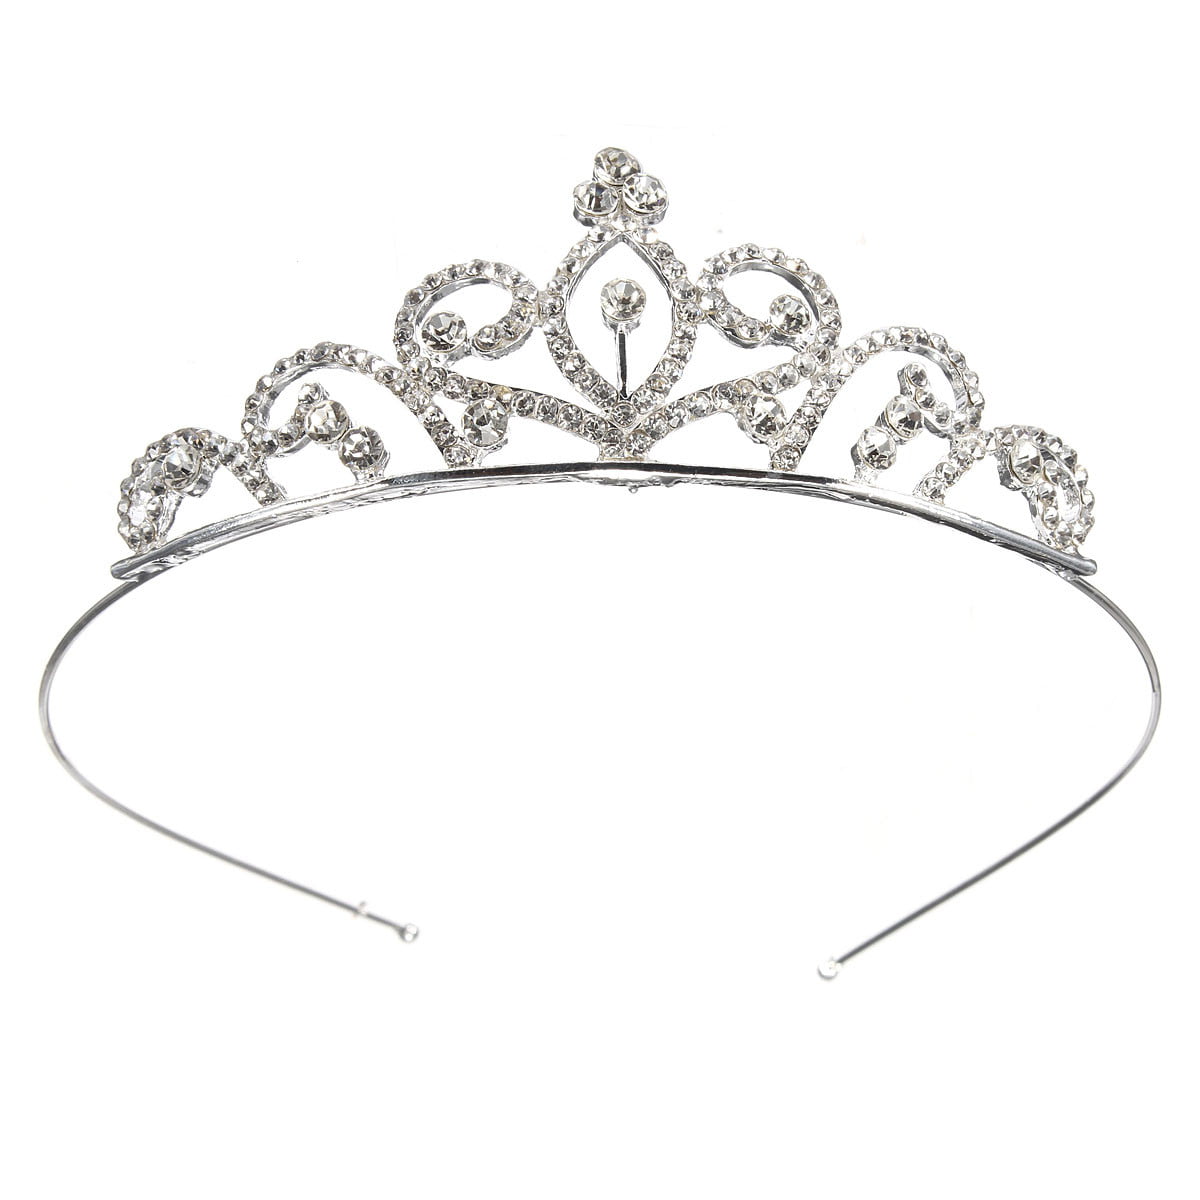 Women Princess Hair Band Jewelry Headband Hoop Tiara Wedding Bridal Crown Silver 